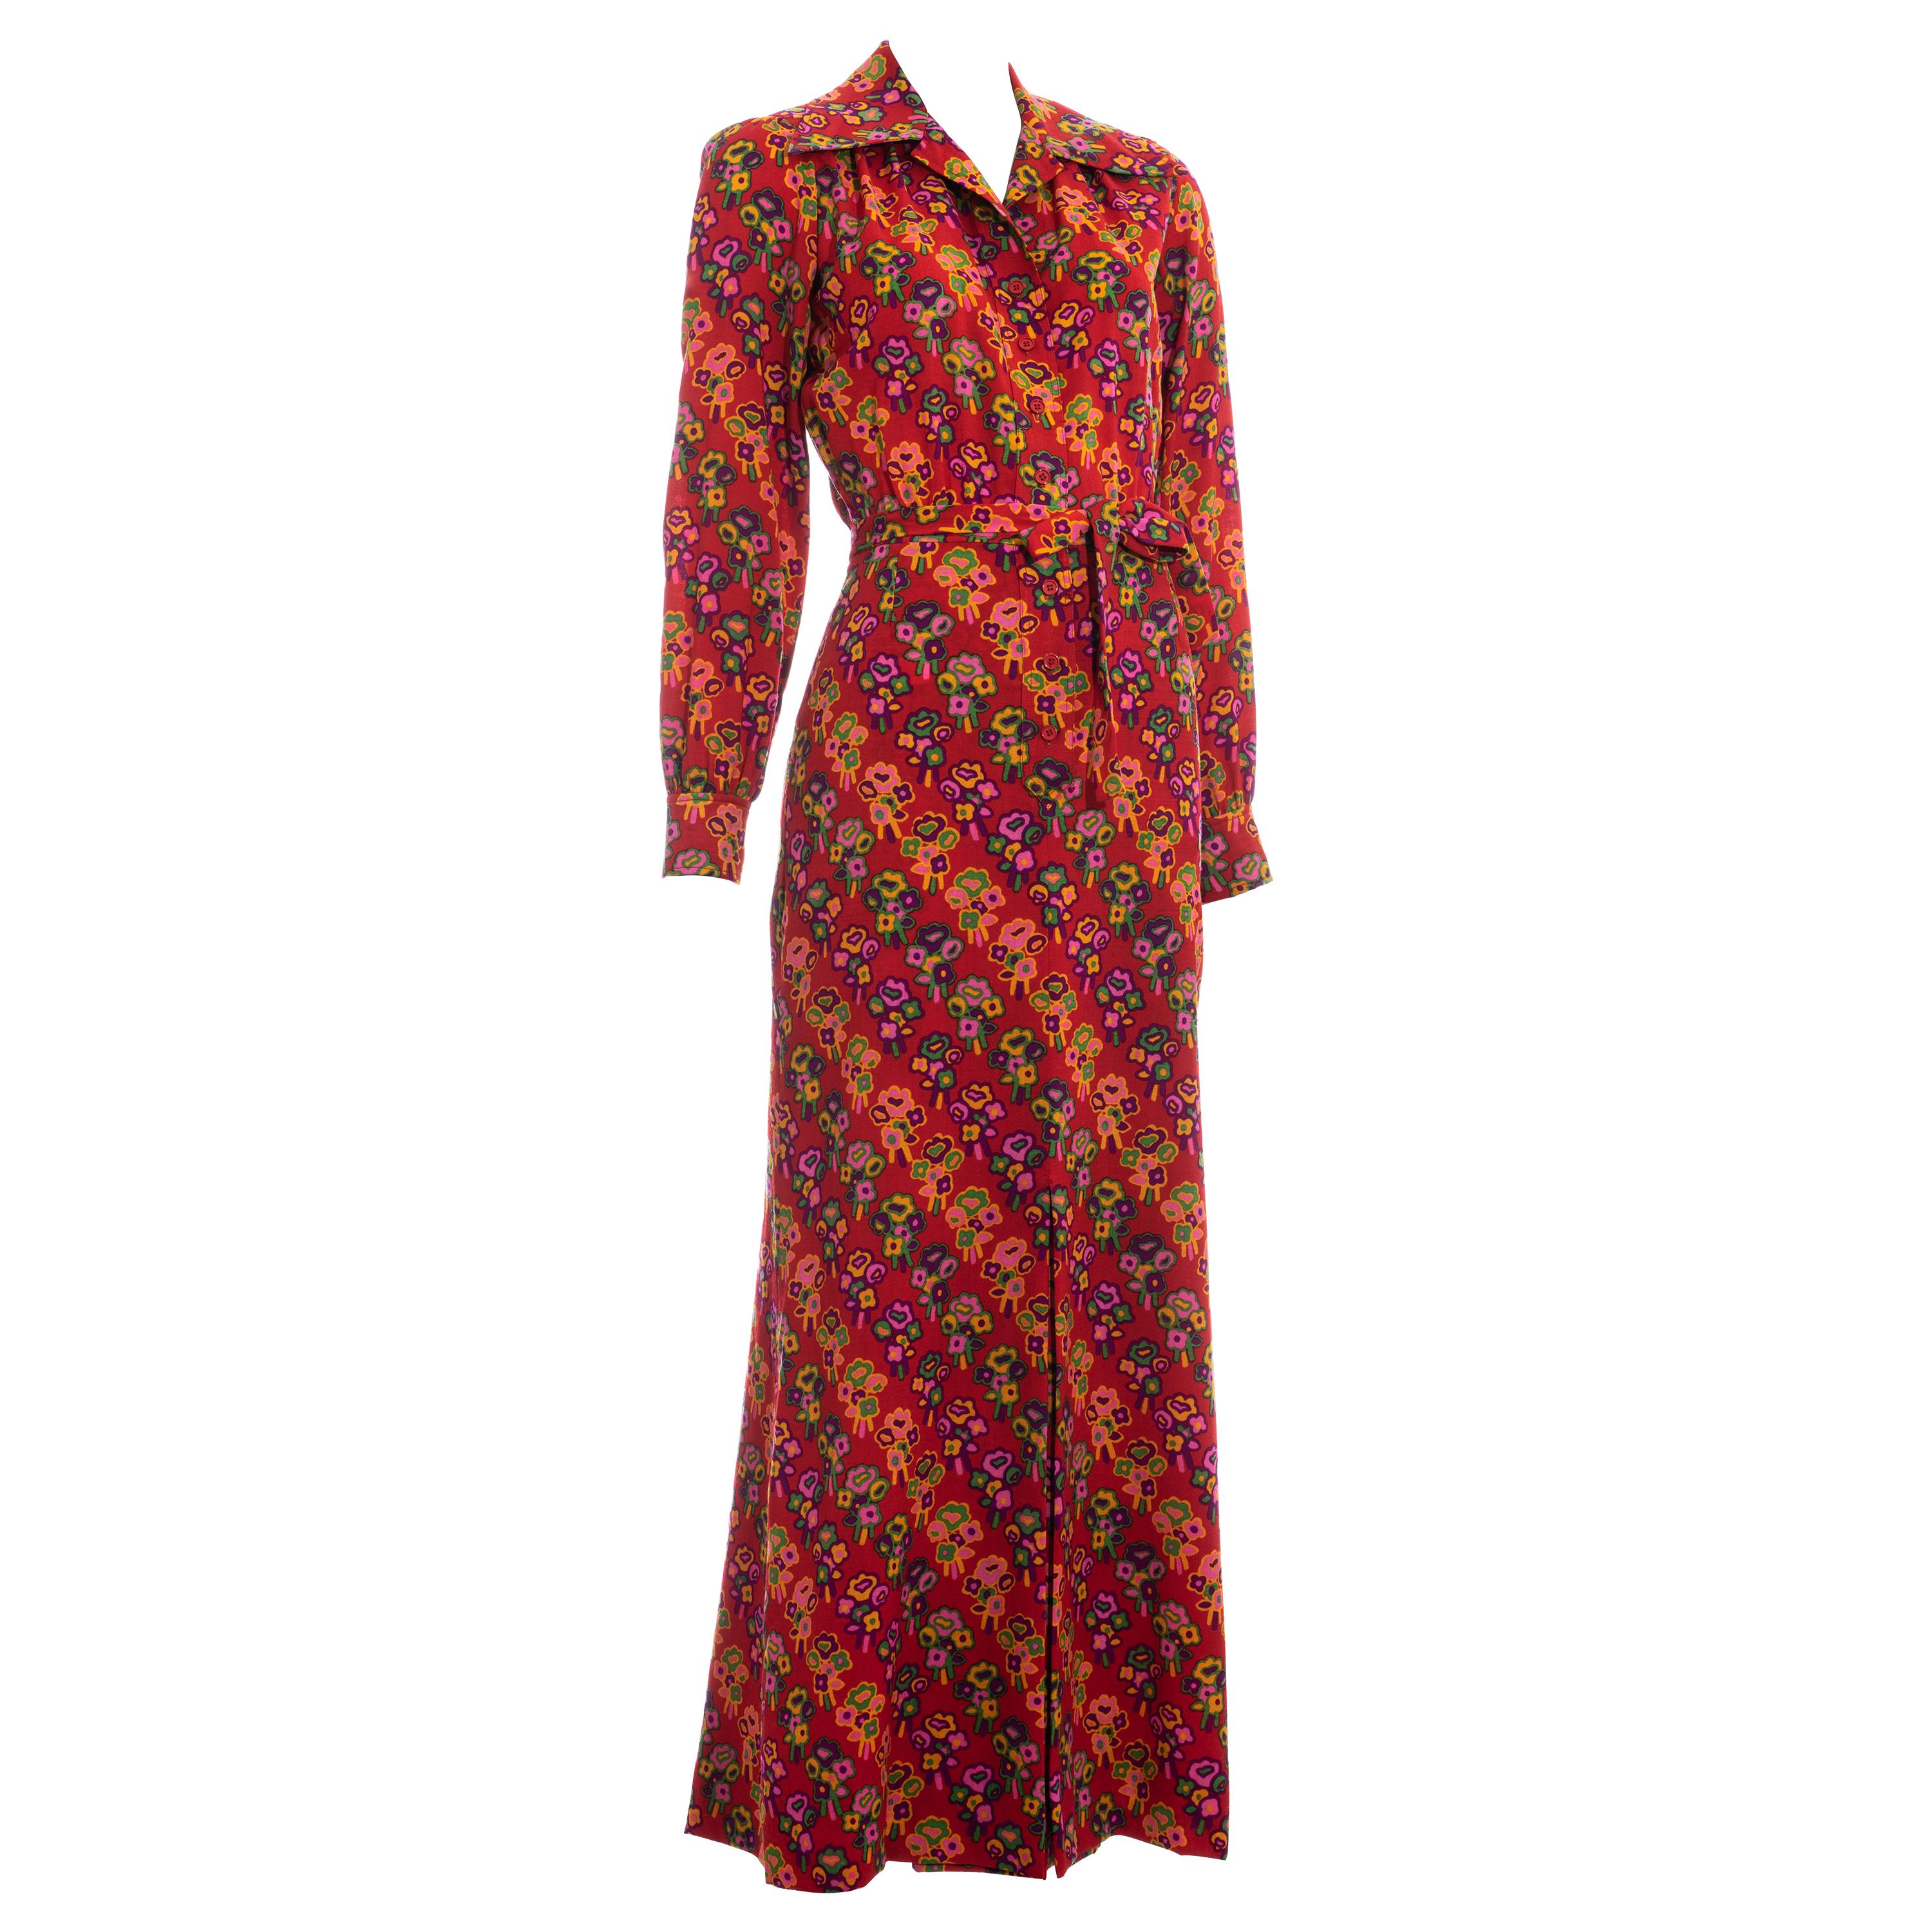 Yves Saint Laurent red floral cotton maxi summer dress, ss 1971